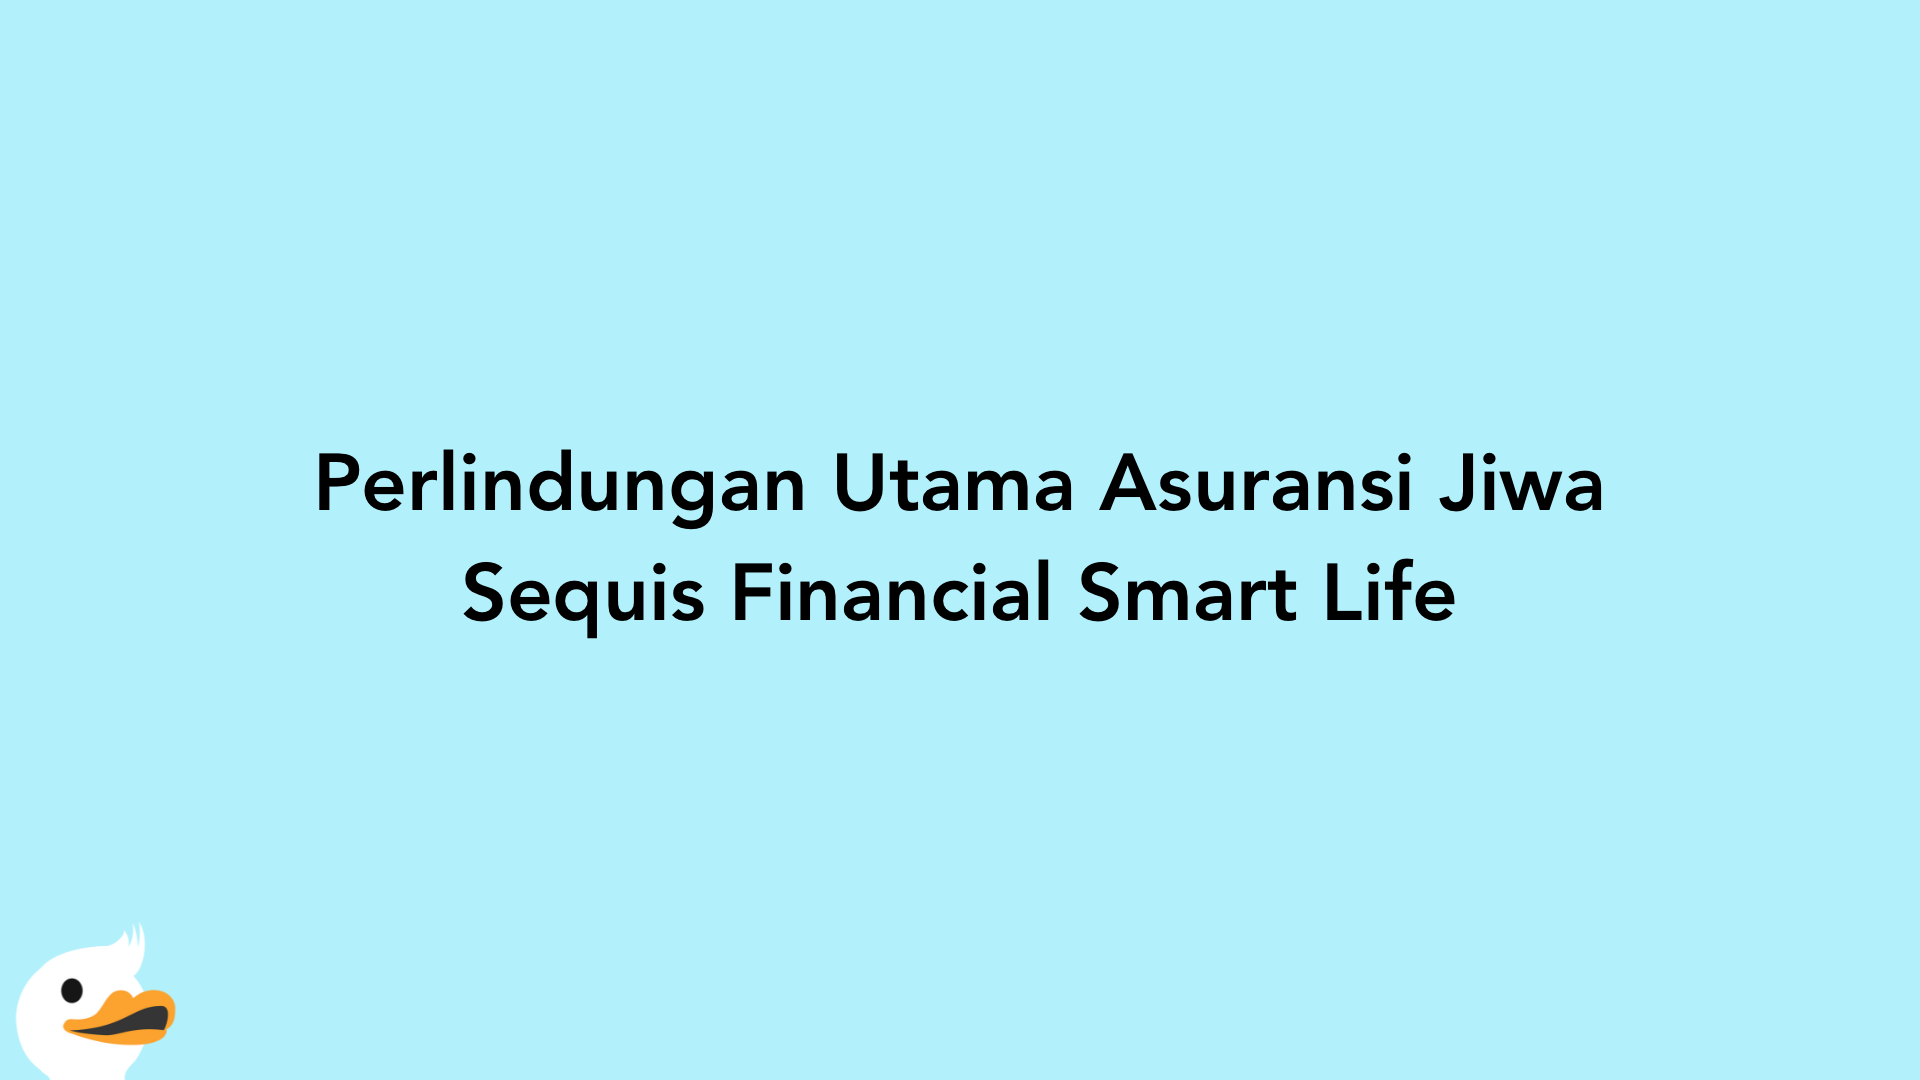 Perlindungan Utama Asuransi Jiwa Sequis Financial Smart Life